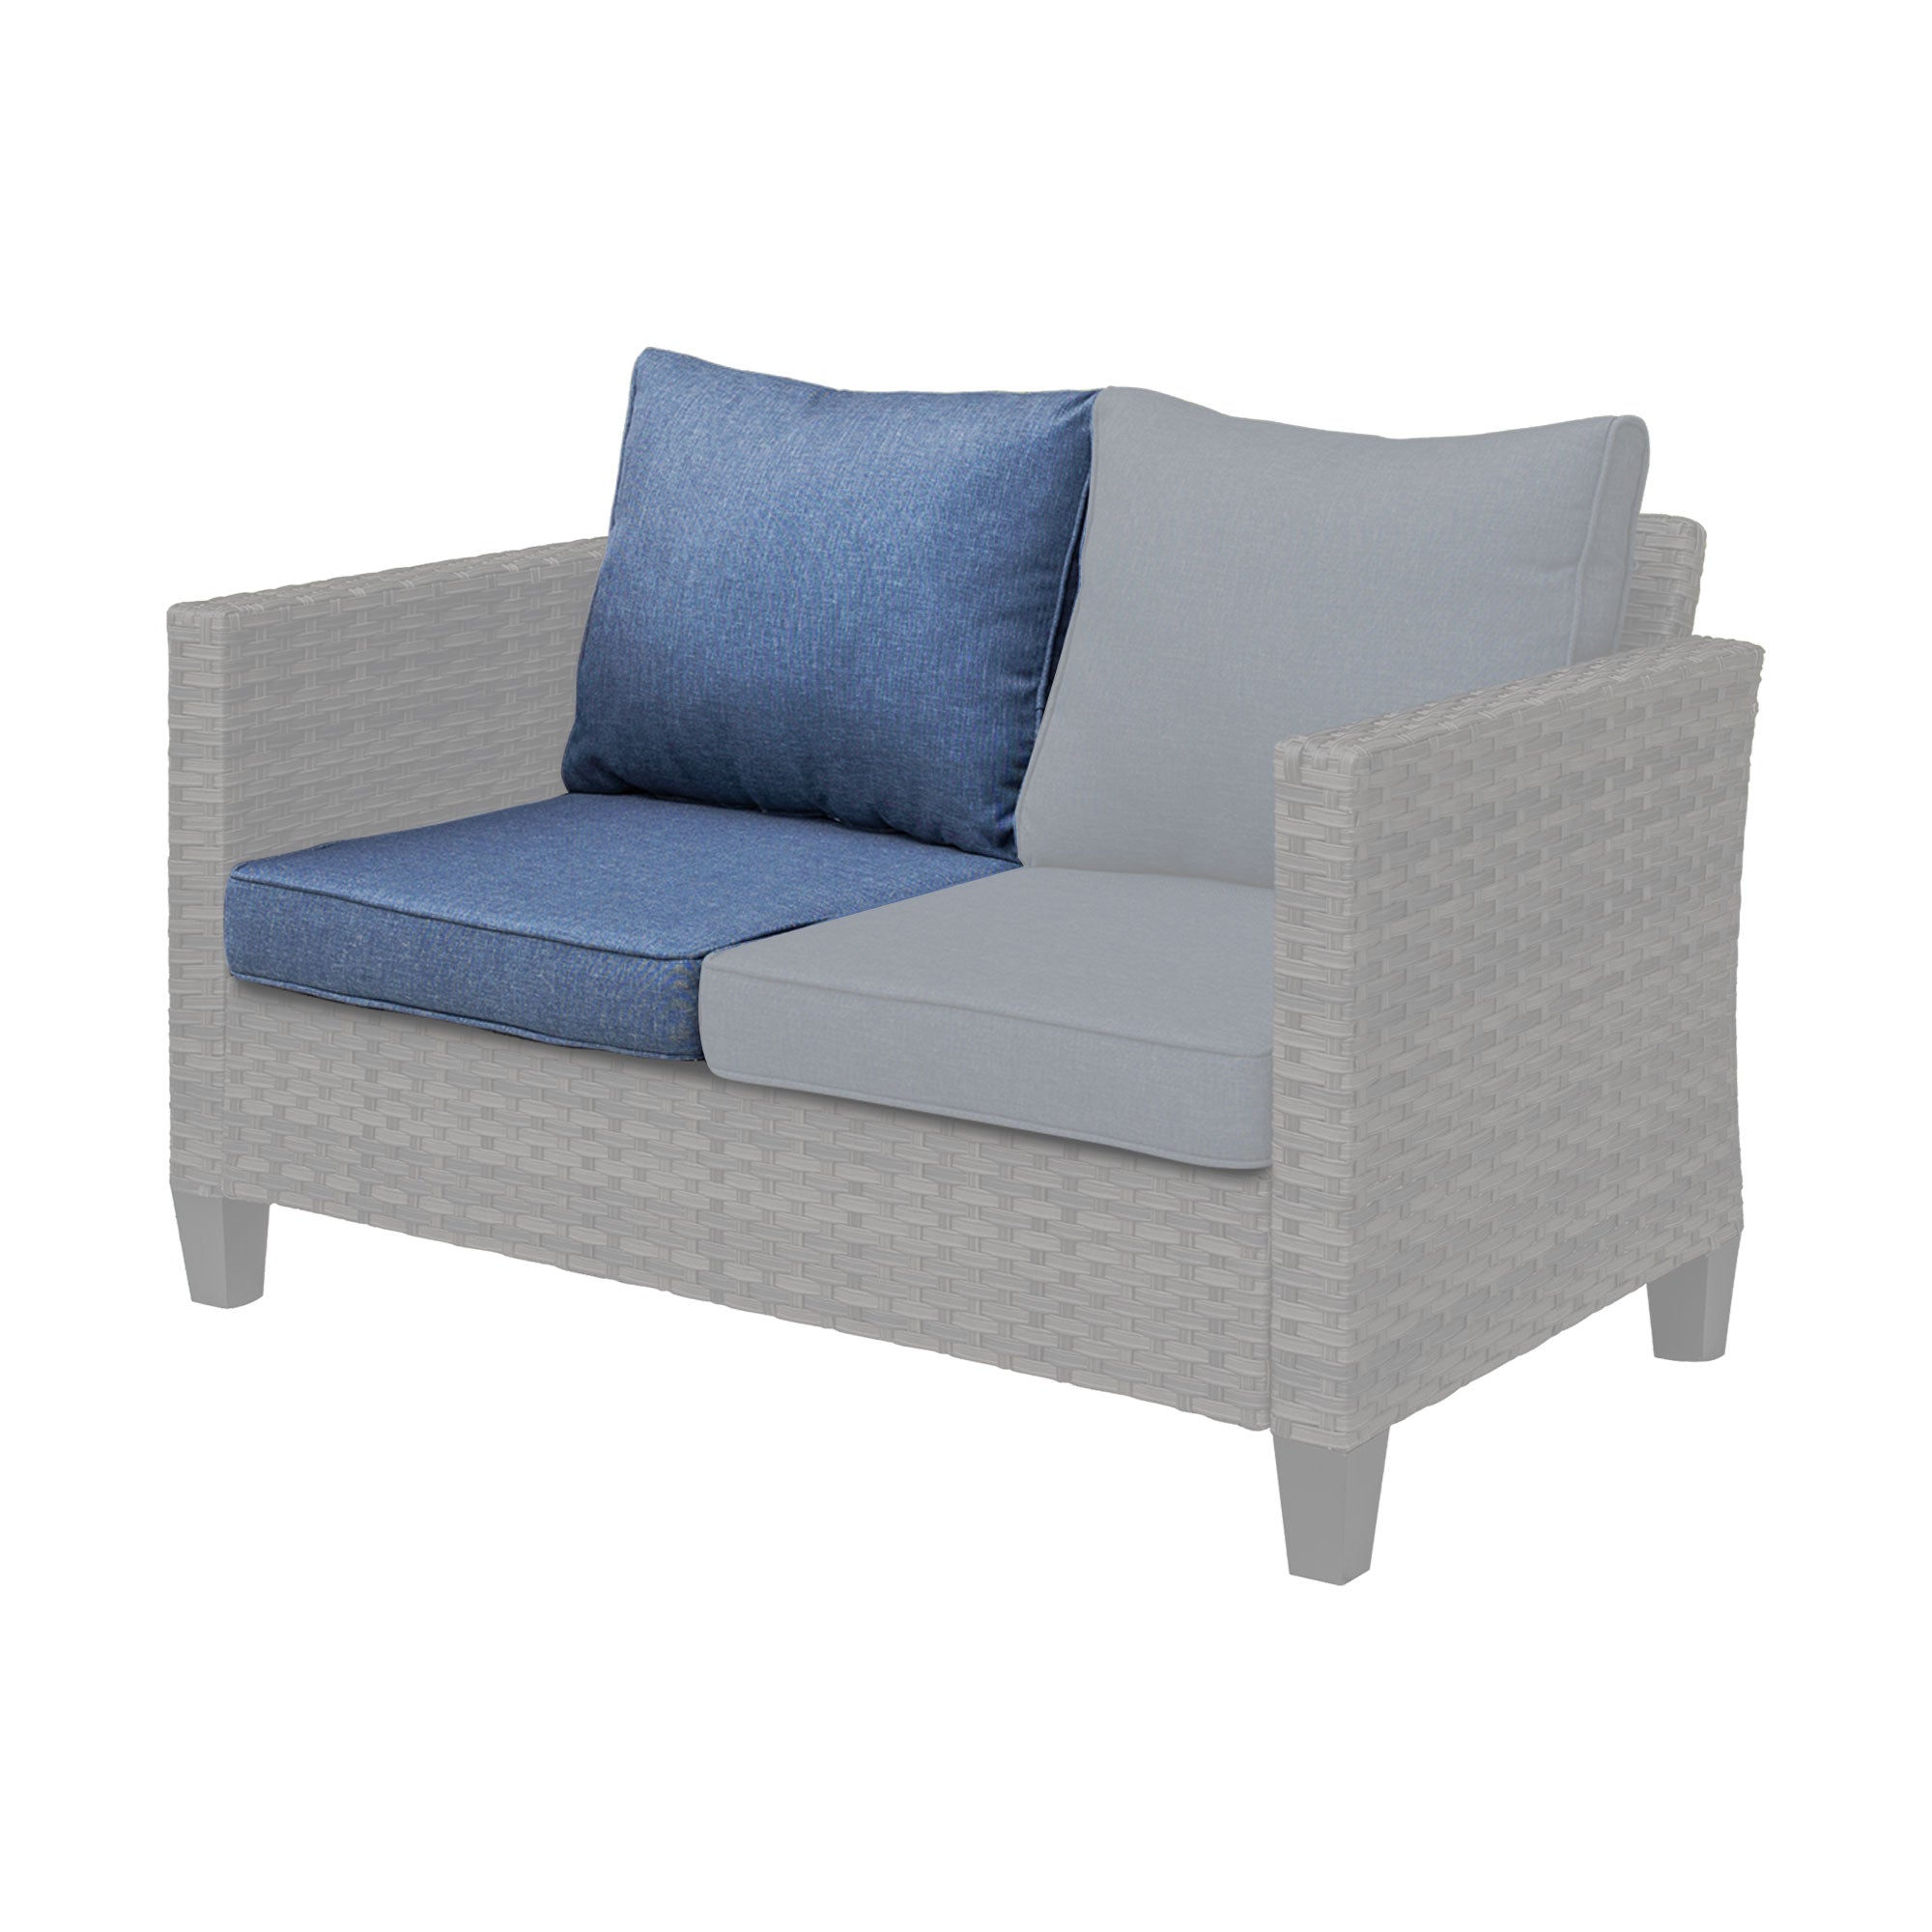 #Color_Denim Blue|#Type_Chair/Loveseat:Seat+Back Cushion